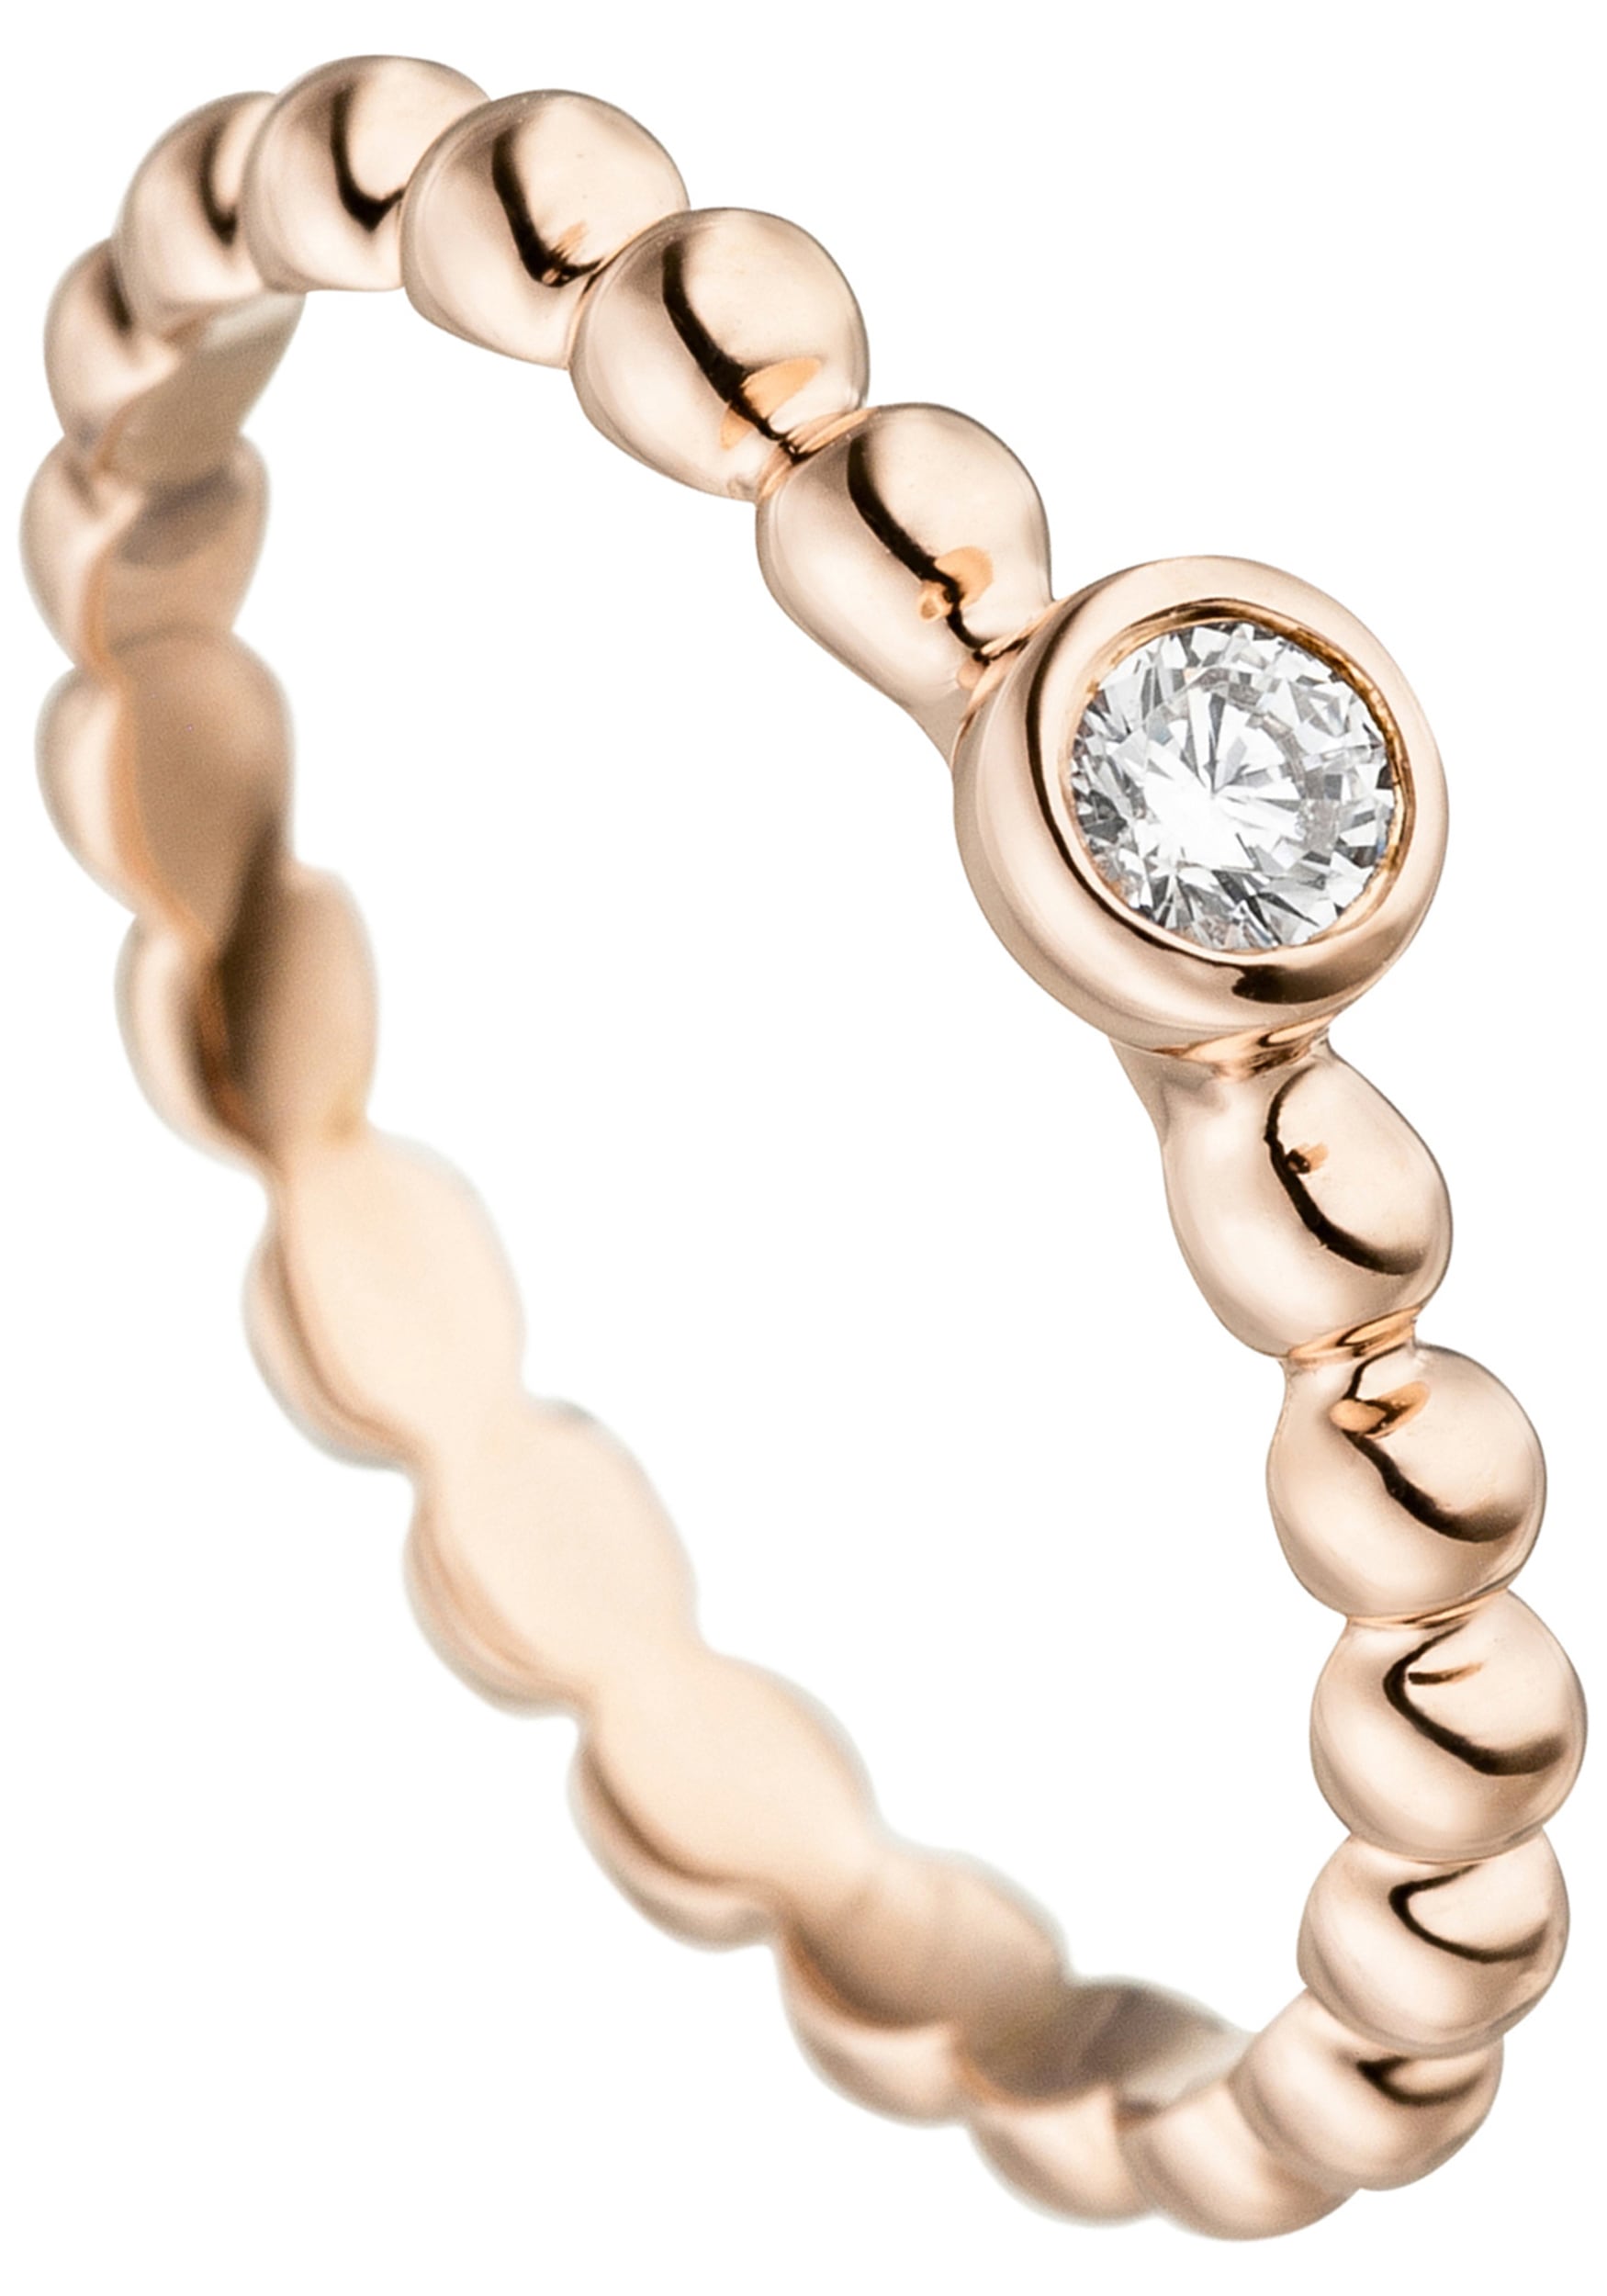 JOBO Fingerring »Kugel-Ring mit Zirkonia« 925 Silber roségold vergoldet